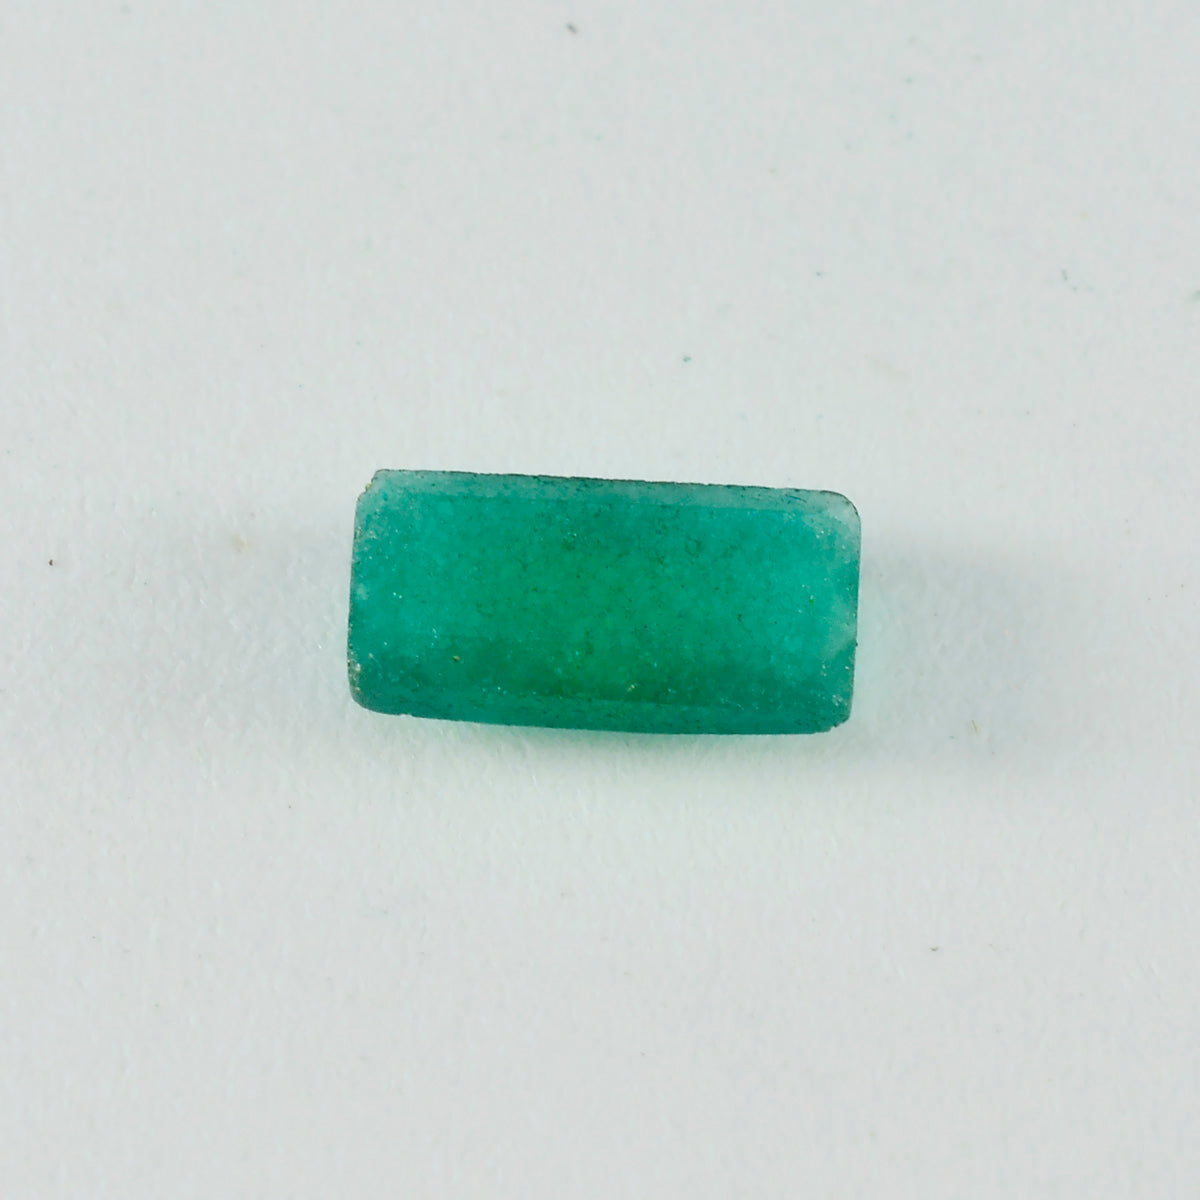 riyogems 1шт настоящая зеленая яшма граненая 8x16 мм форма багета +1 качество свободный драгоценный камень